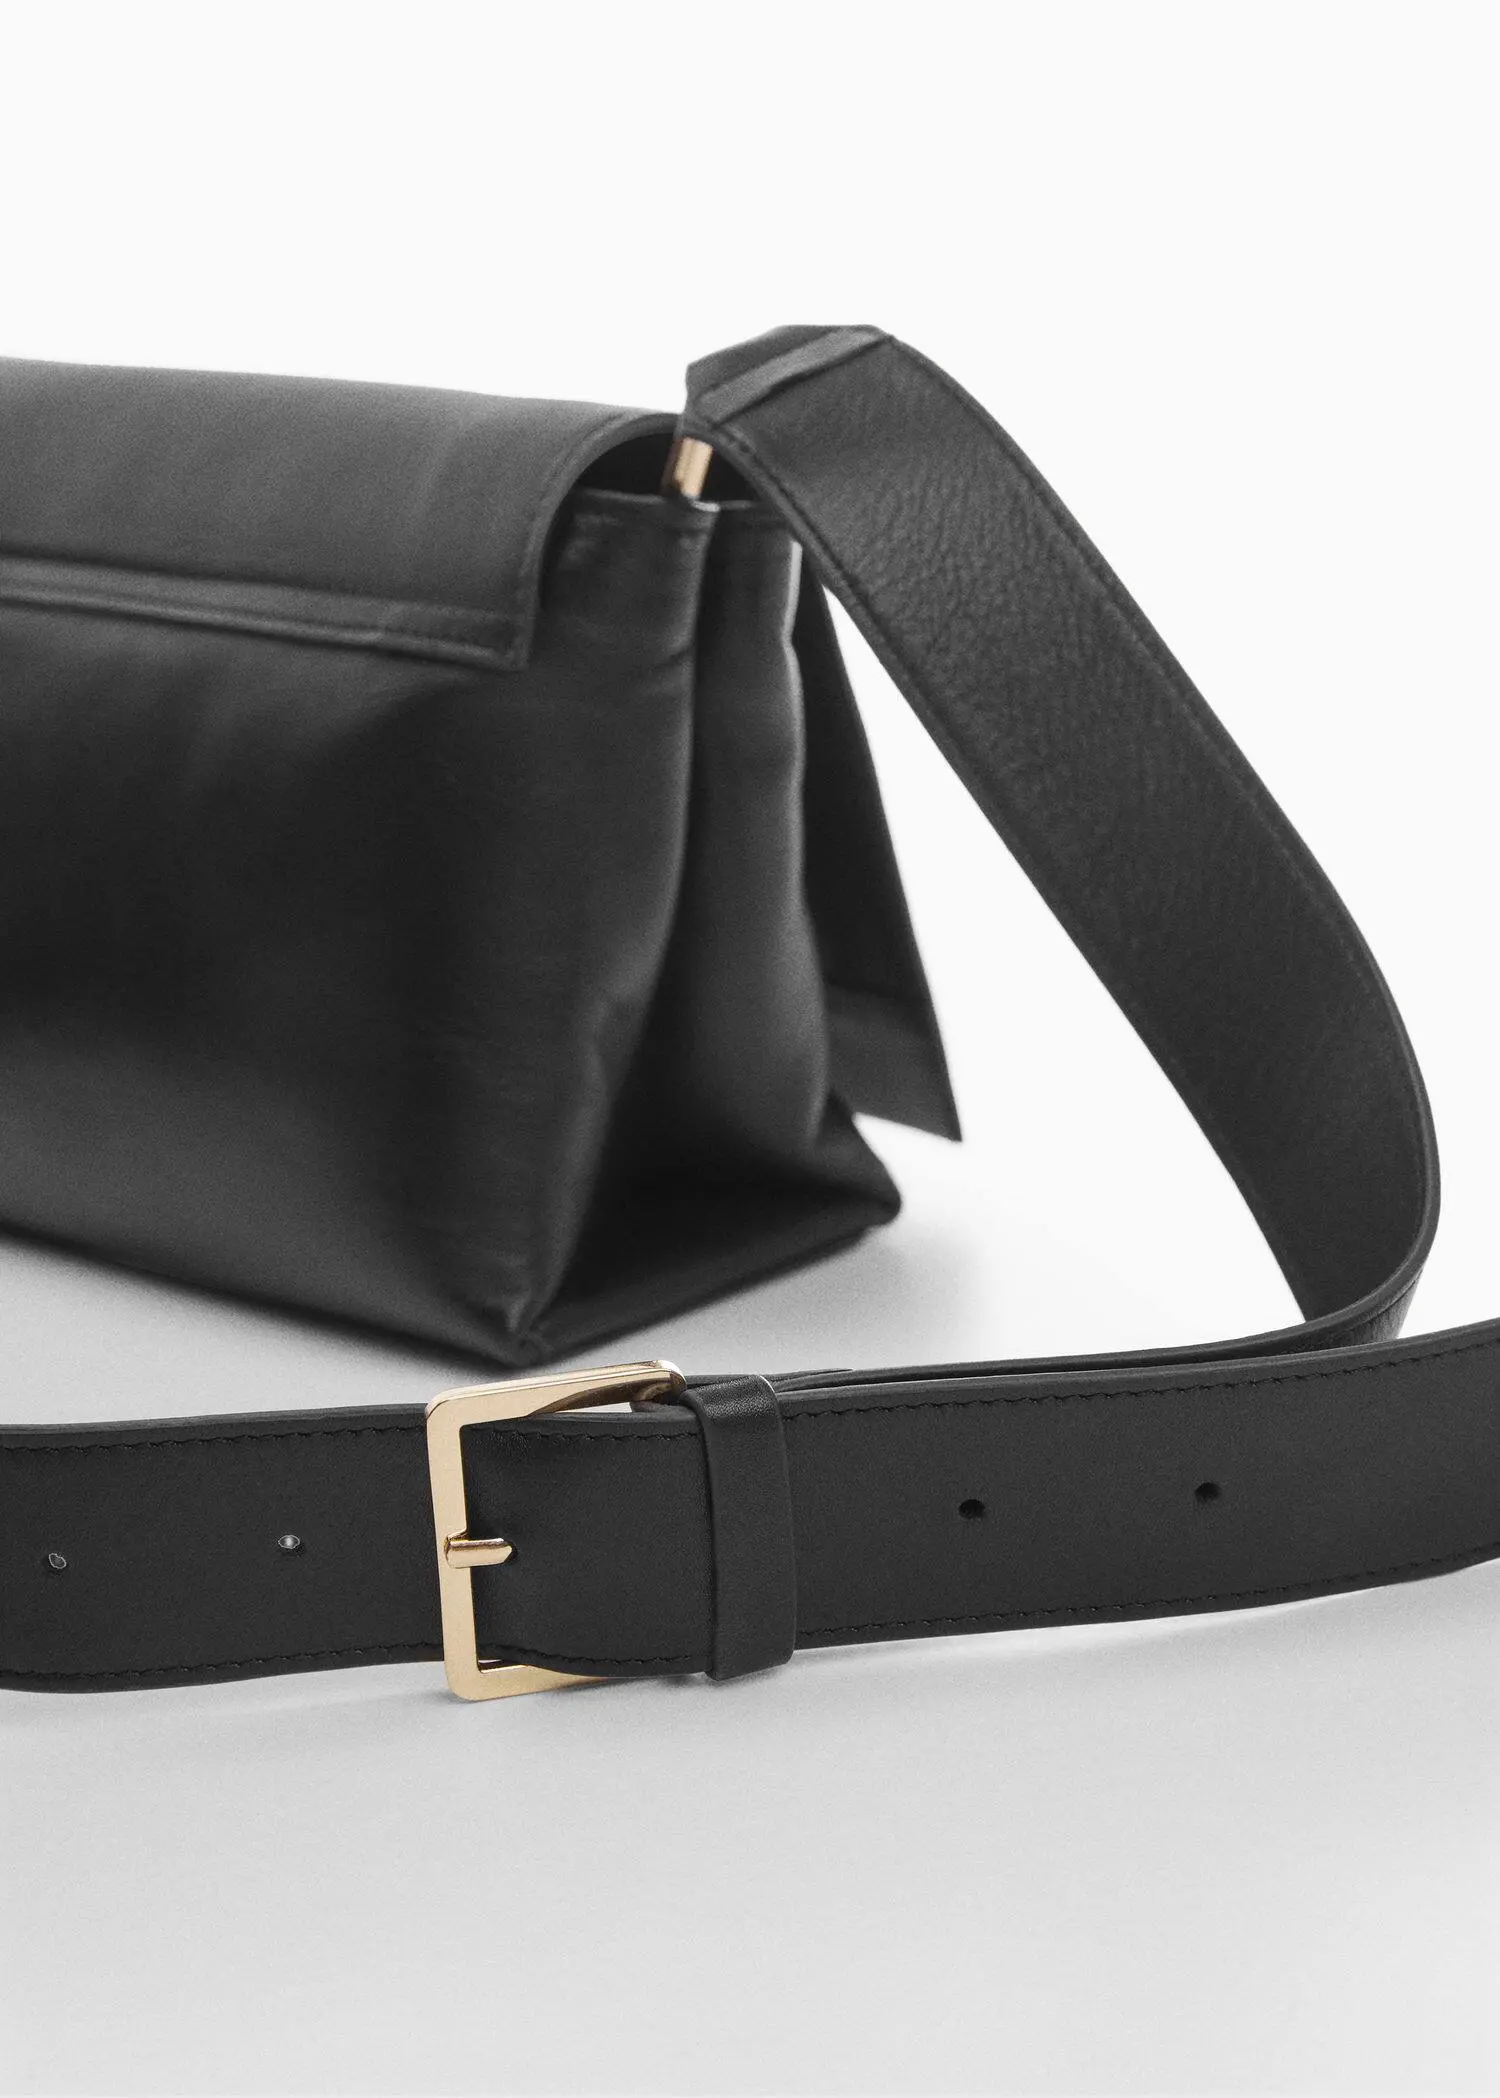 Mango Leather shoulder bag with flap. 2